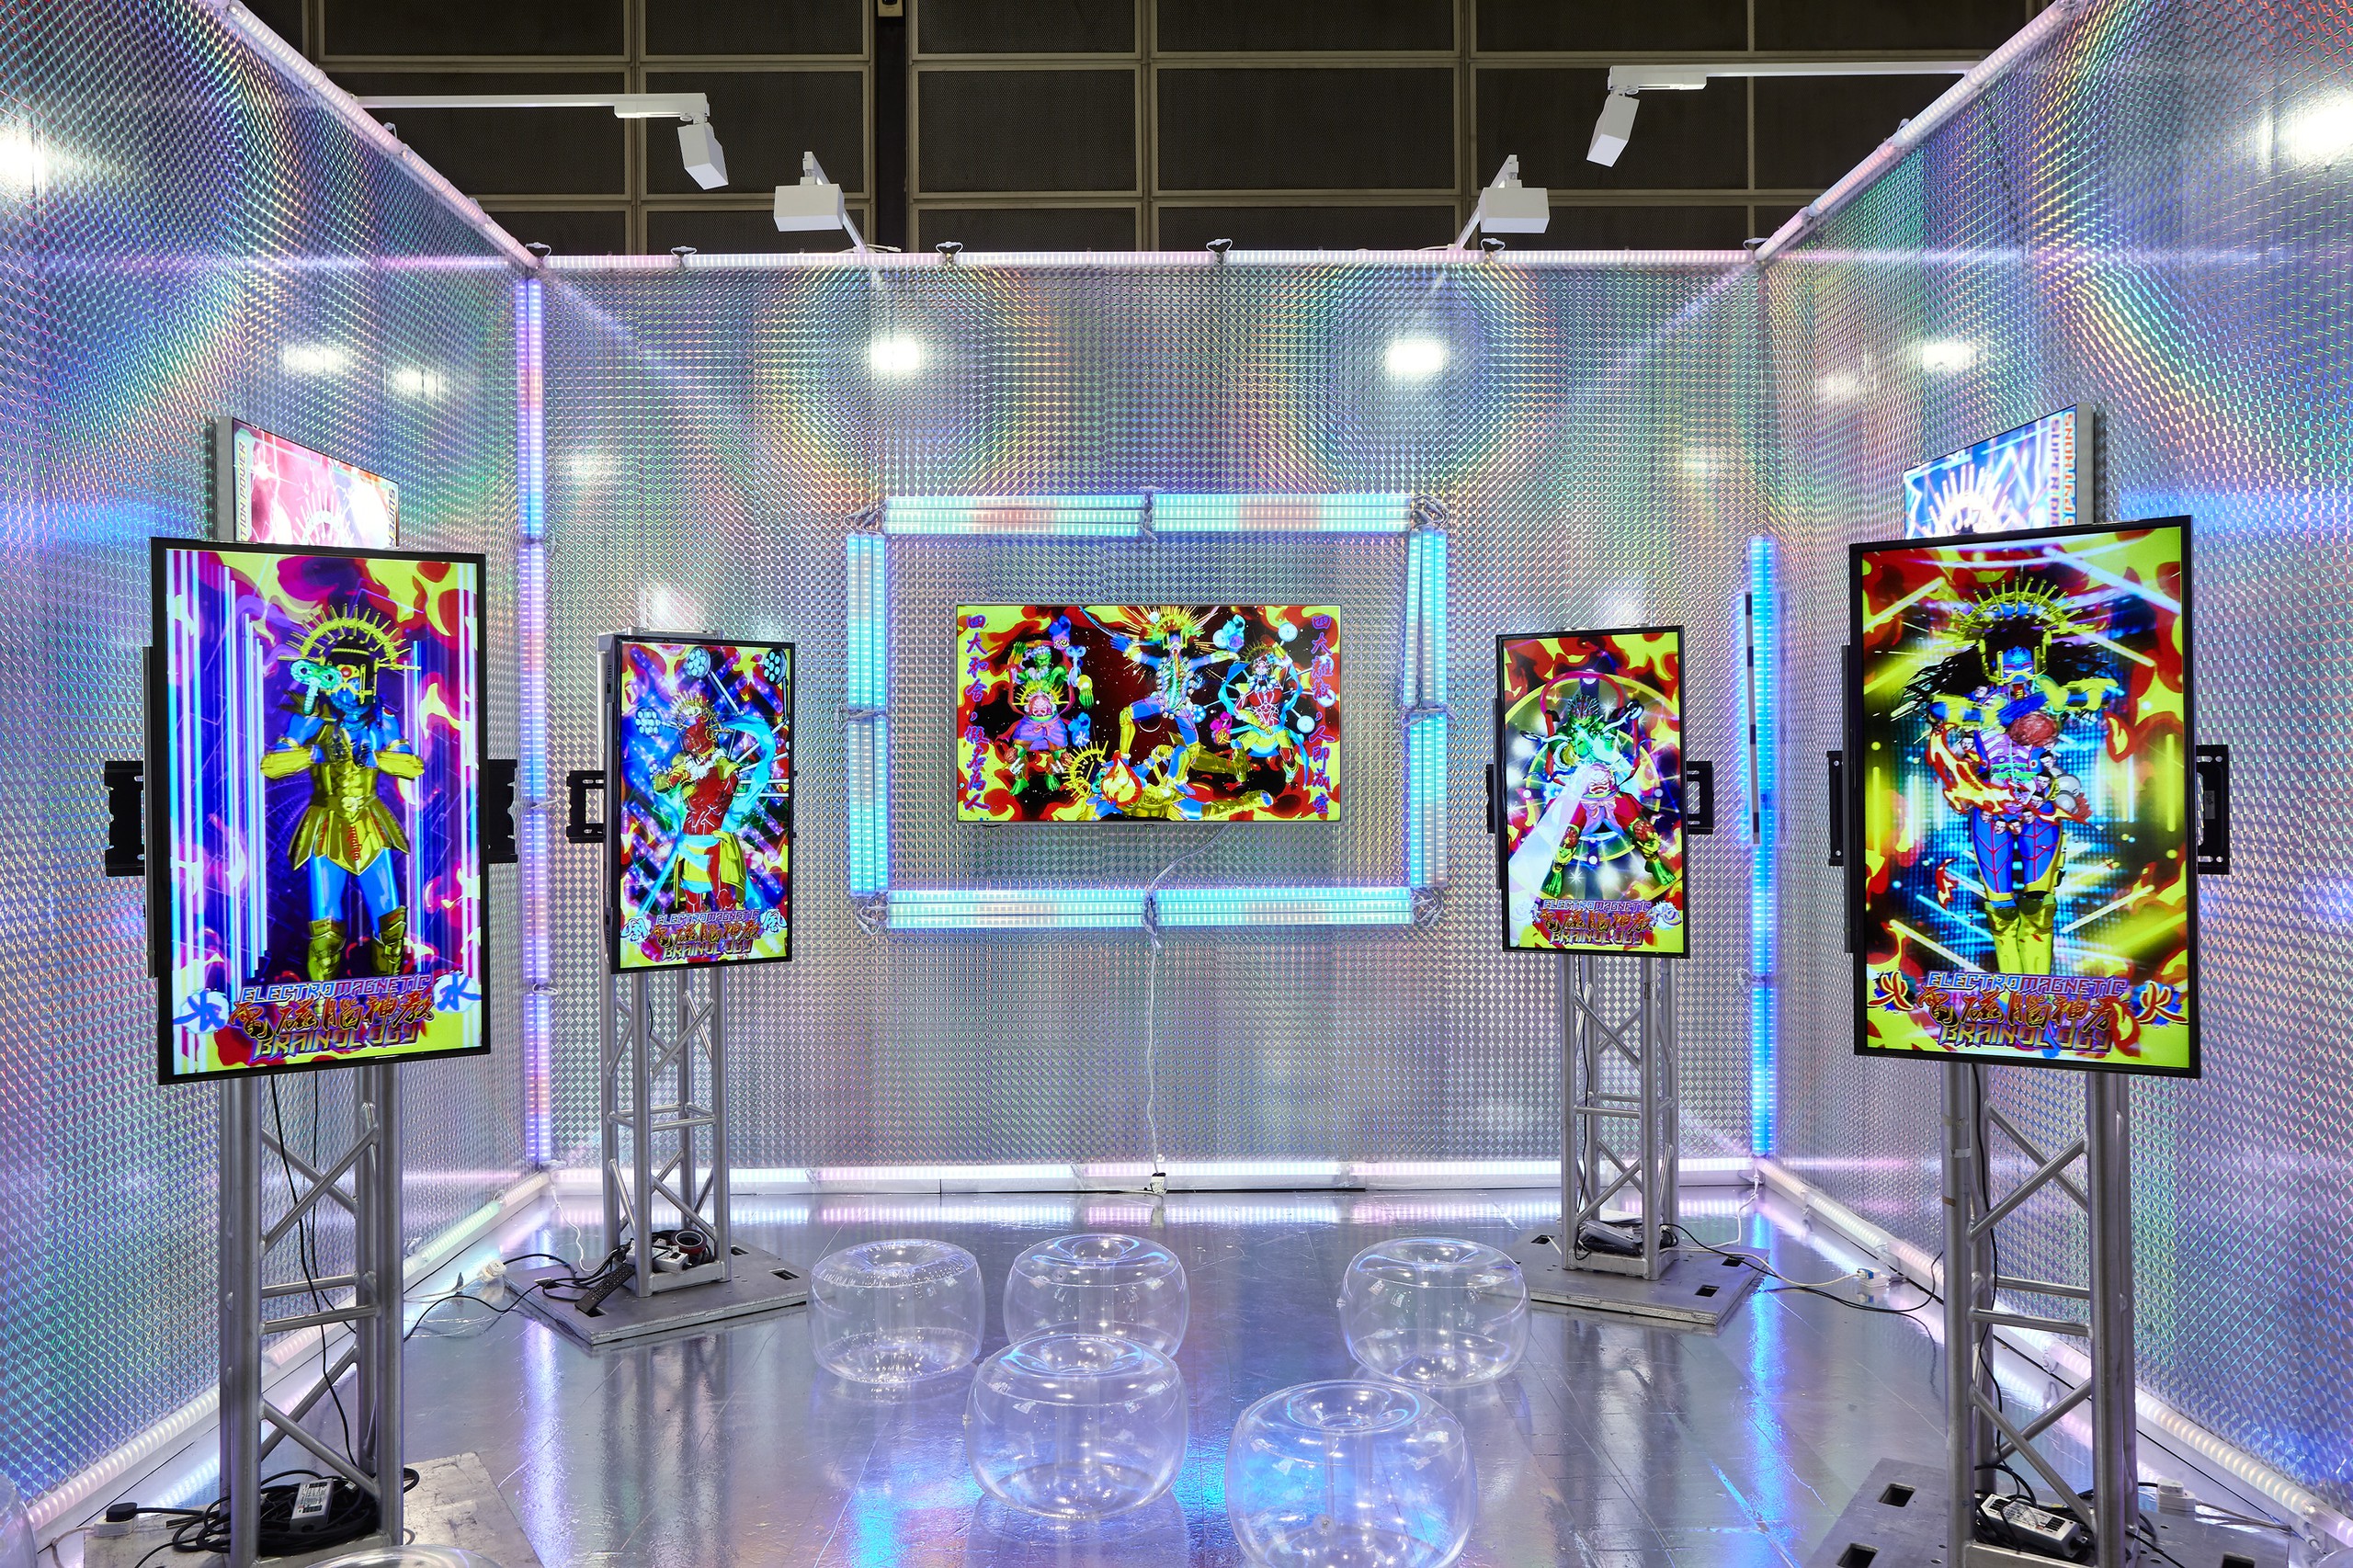 Installation view, Cyber altar, Art Basel Hong Kong, Hong Kong, 2019